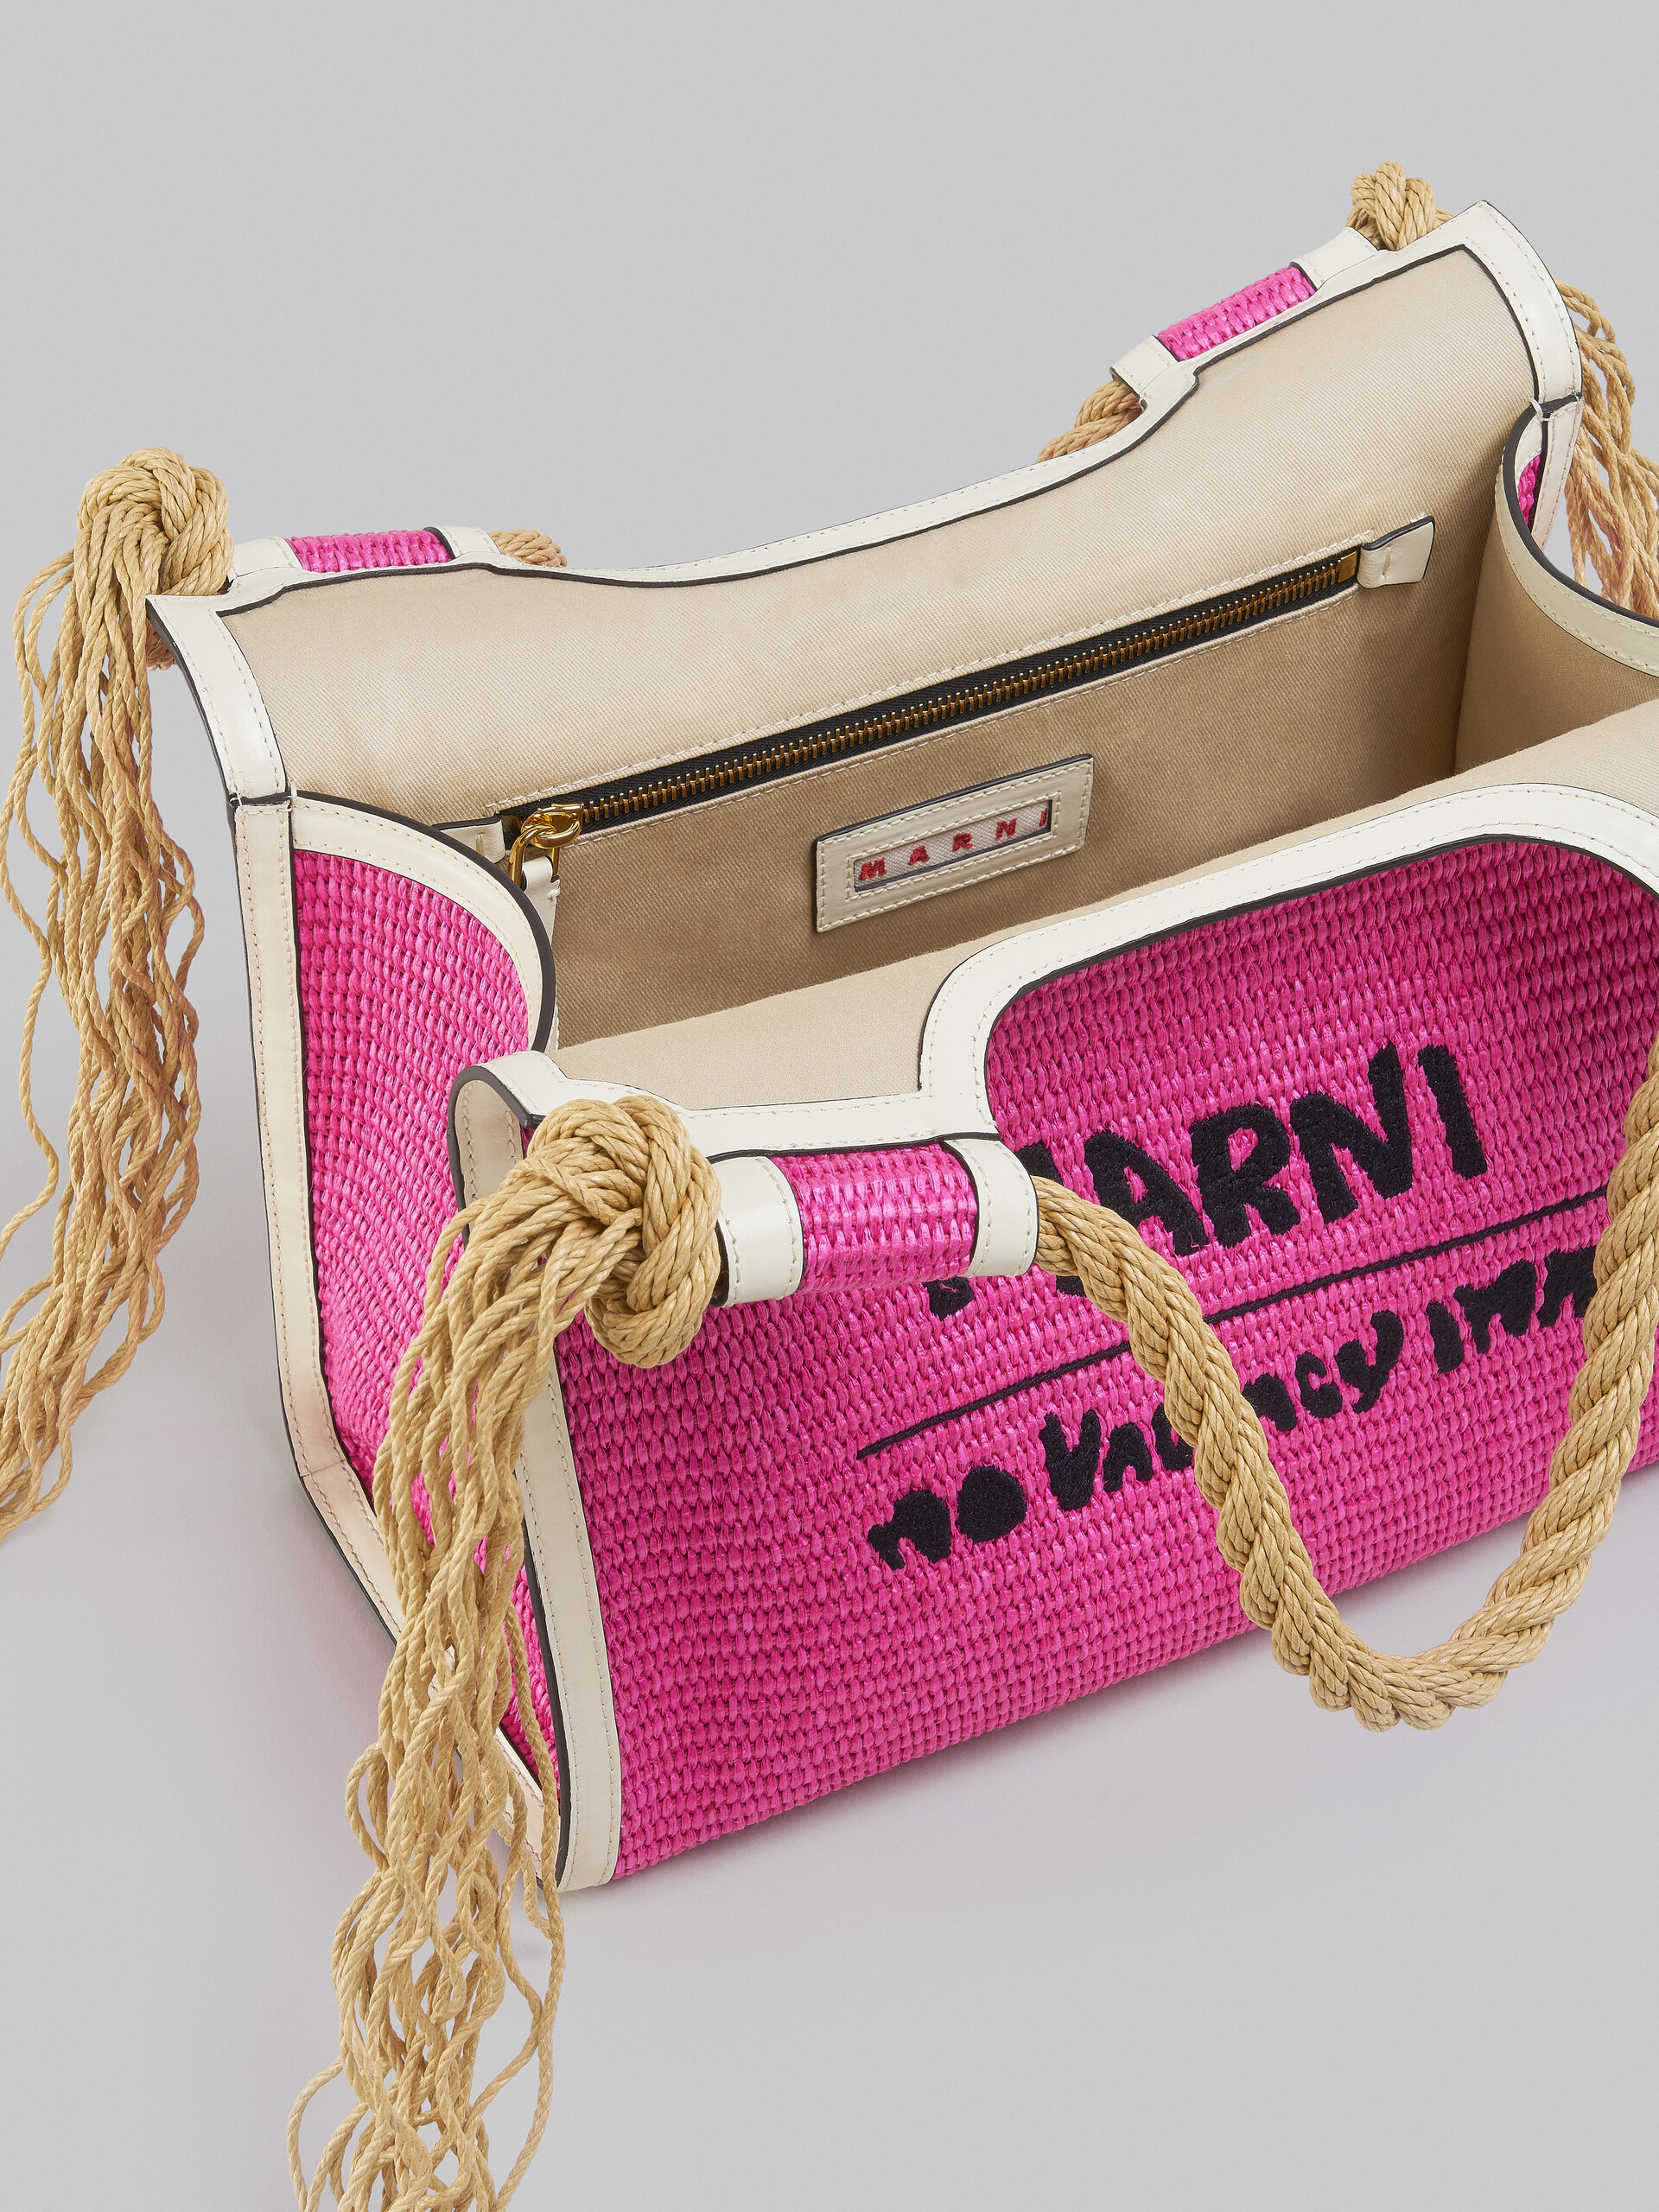 Marni x No Vacancy Inn - Marcel Tote Bag in pink raffia with white trims - Handbag - Image 4